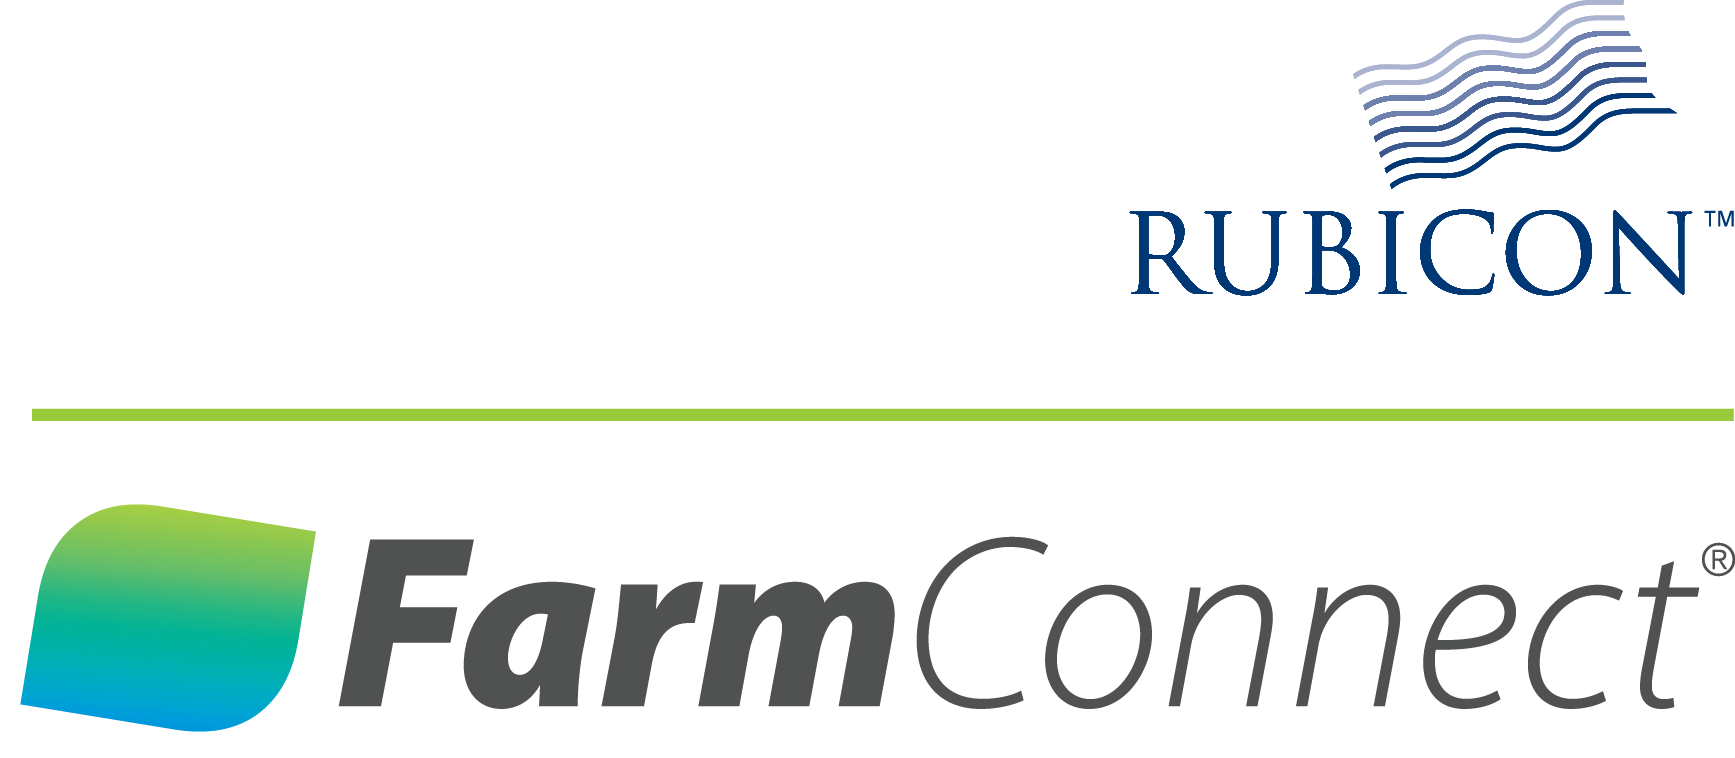 FarmConnect Rubicon Full Colour Combo Transparent